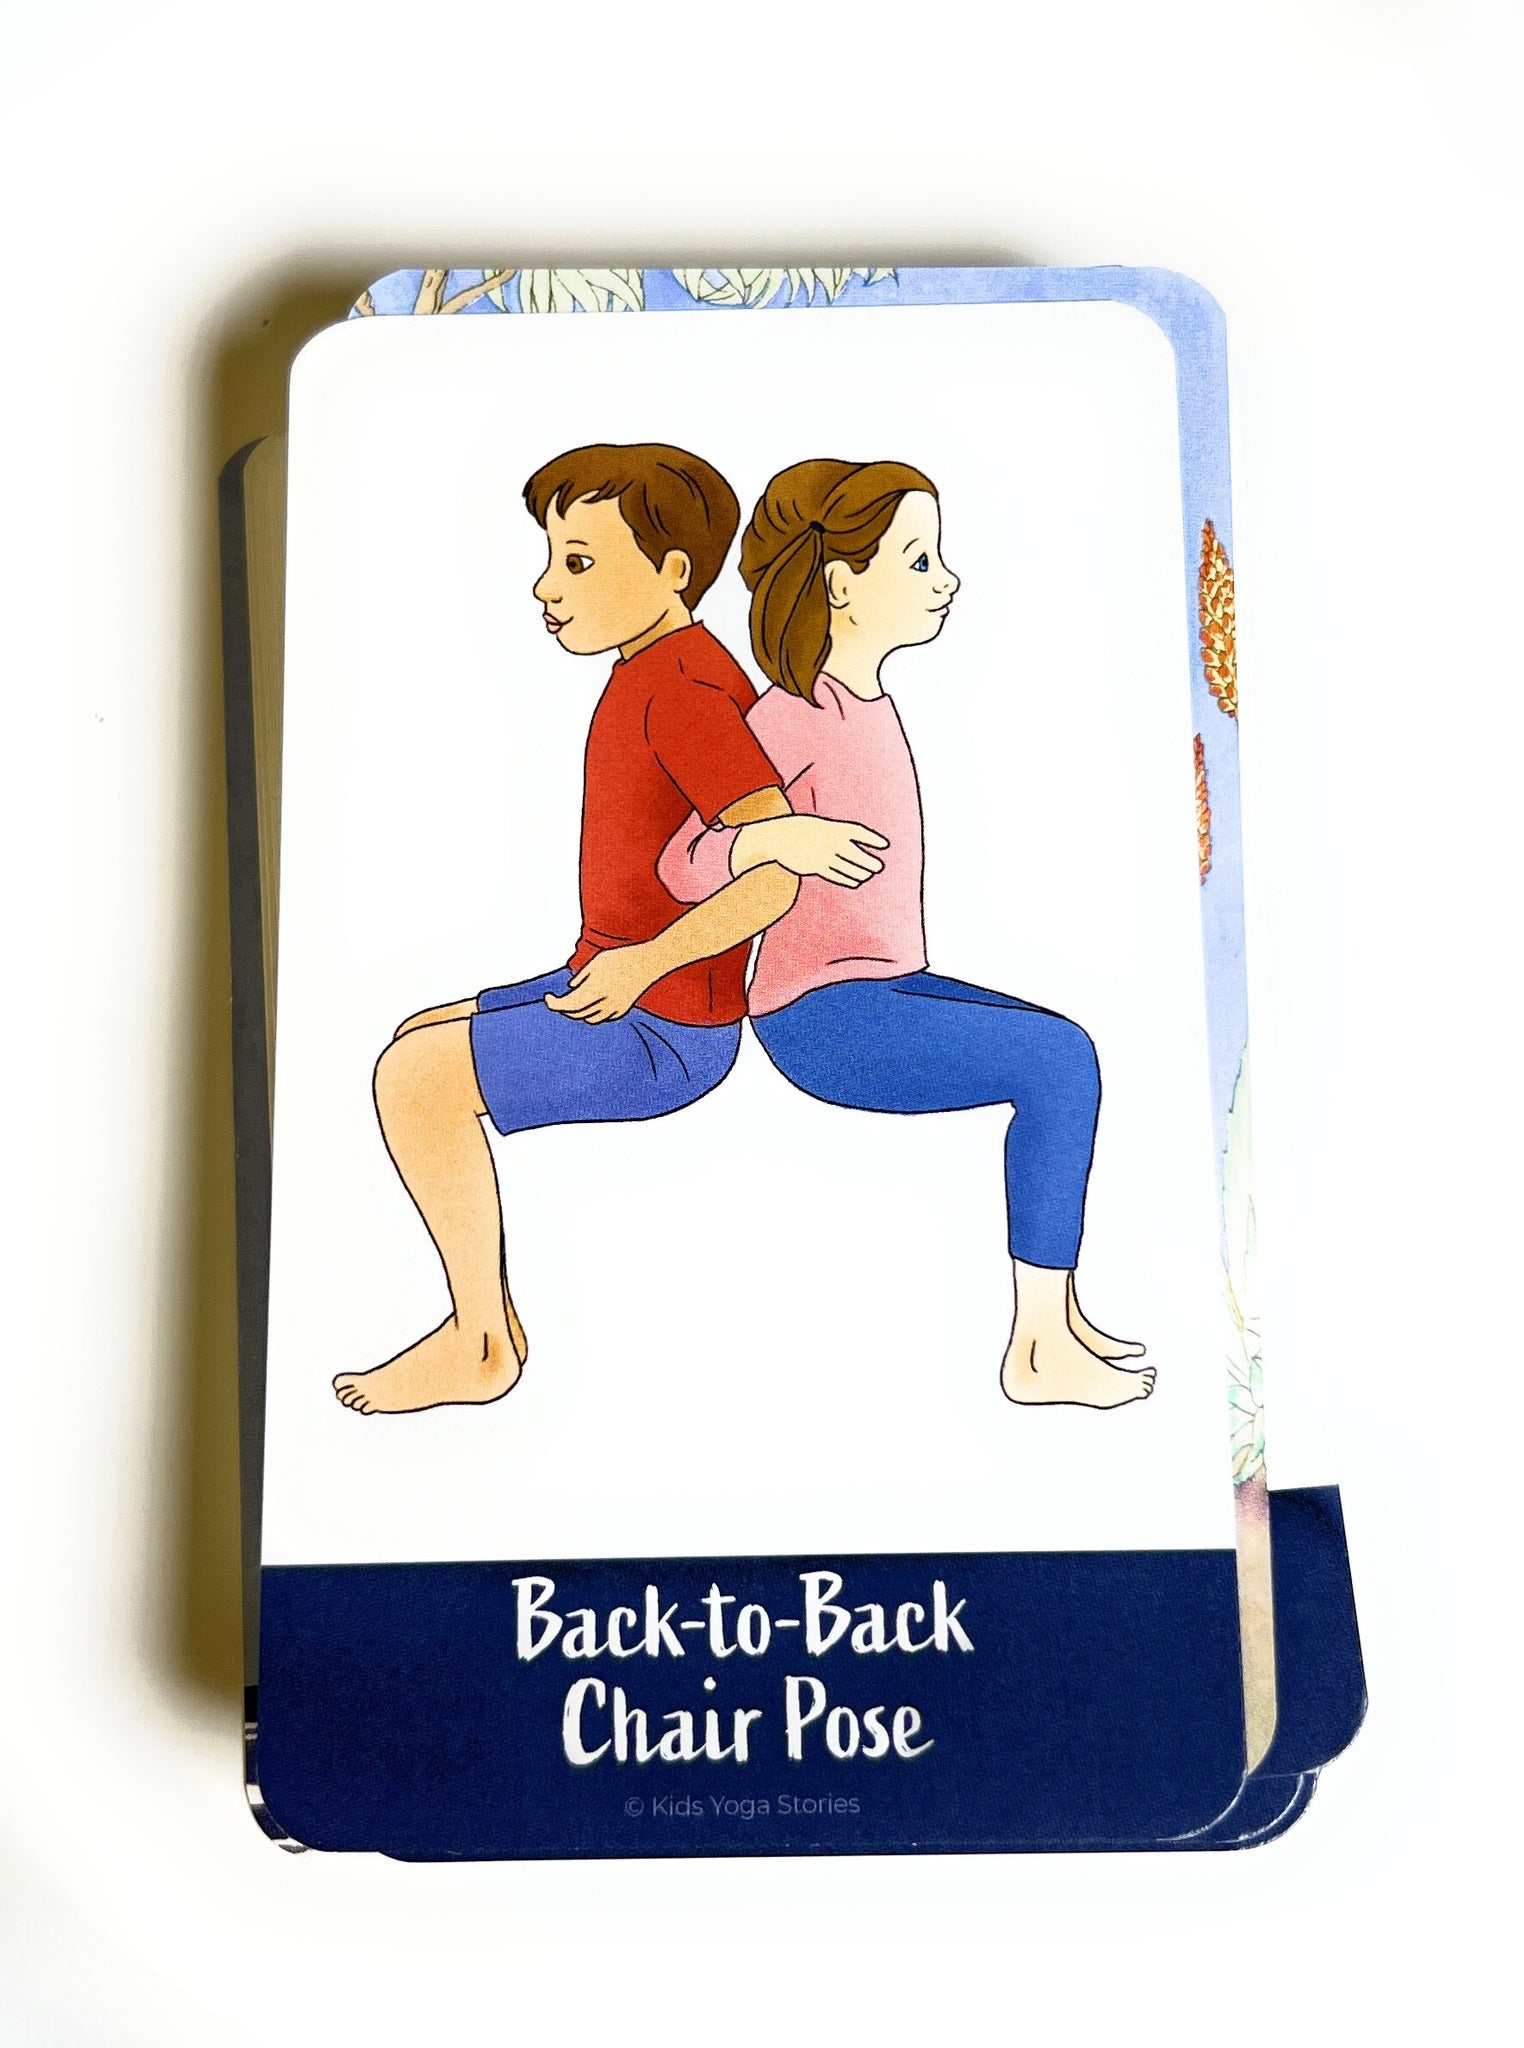 Kids Yoga Activity Indoor Game 2 Blocks 24 Pose Cards 3 Sand Timers 29pc  Set | eBay